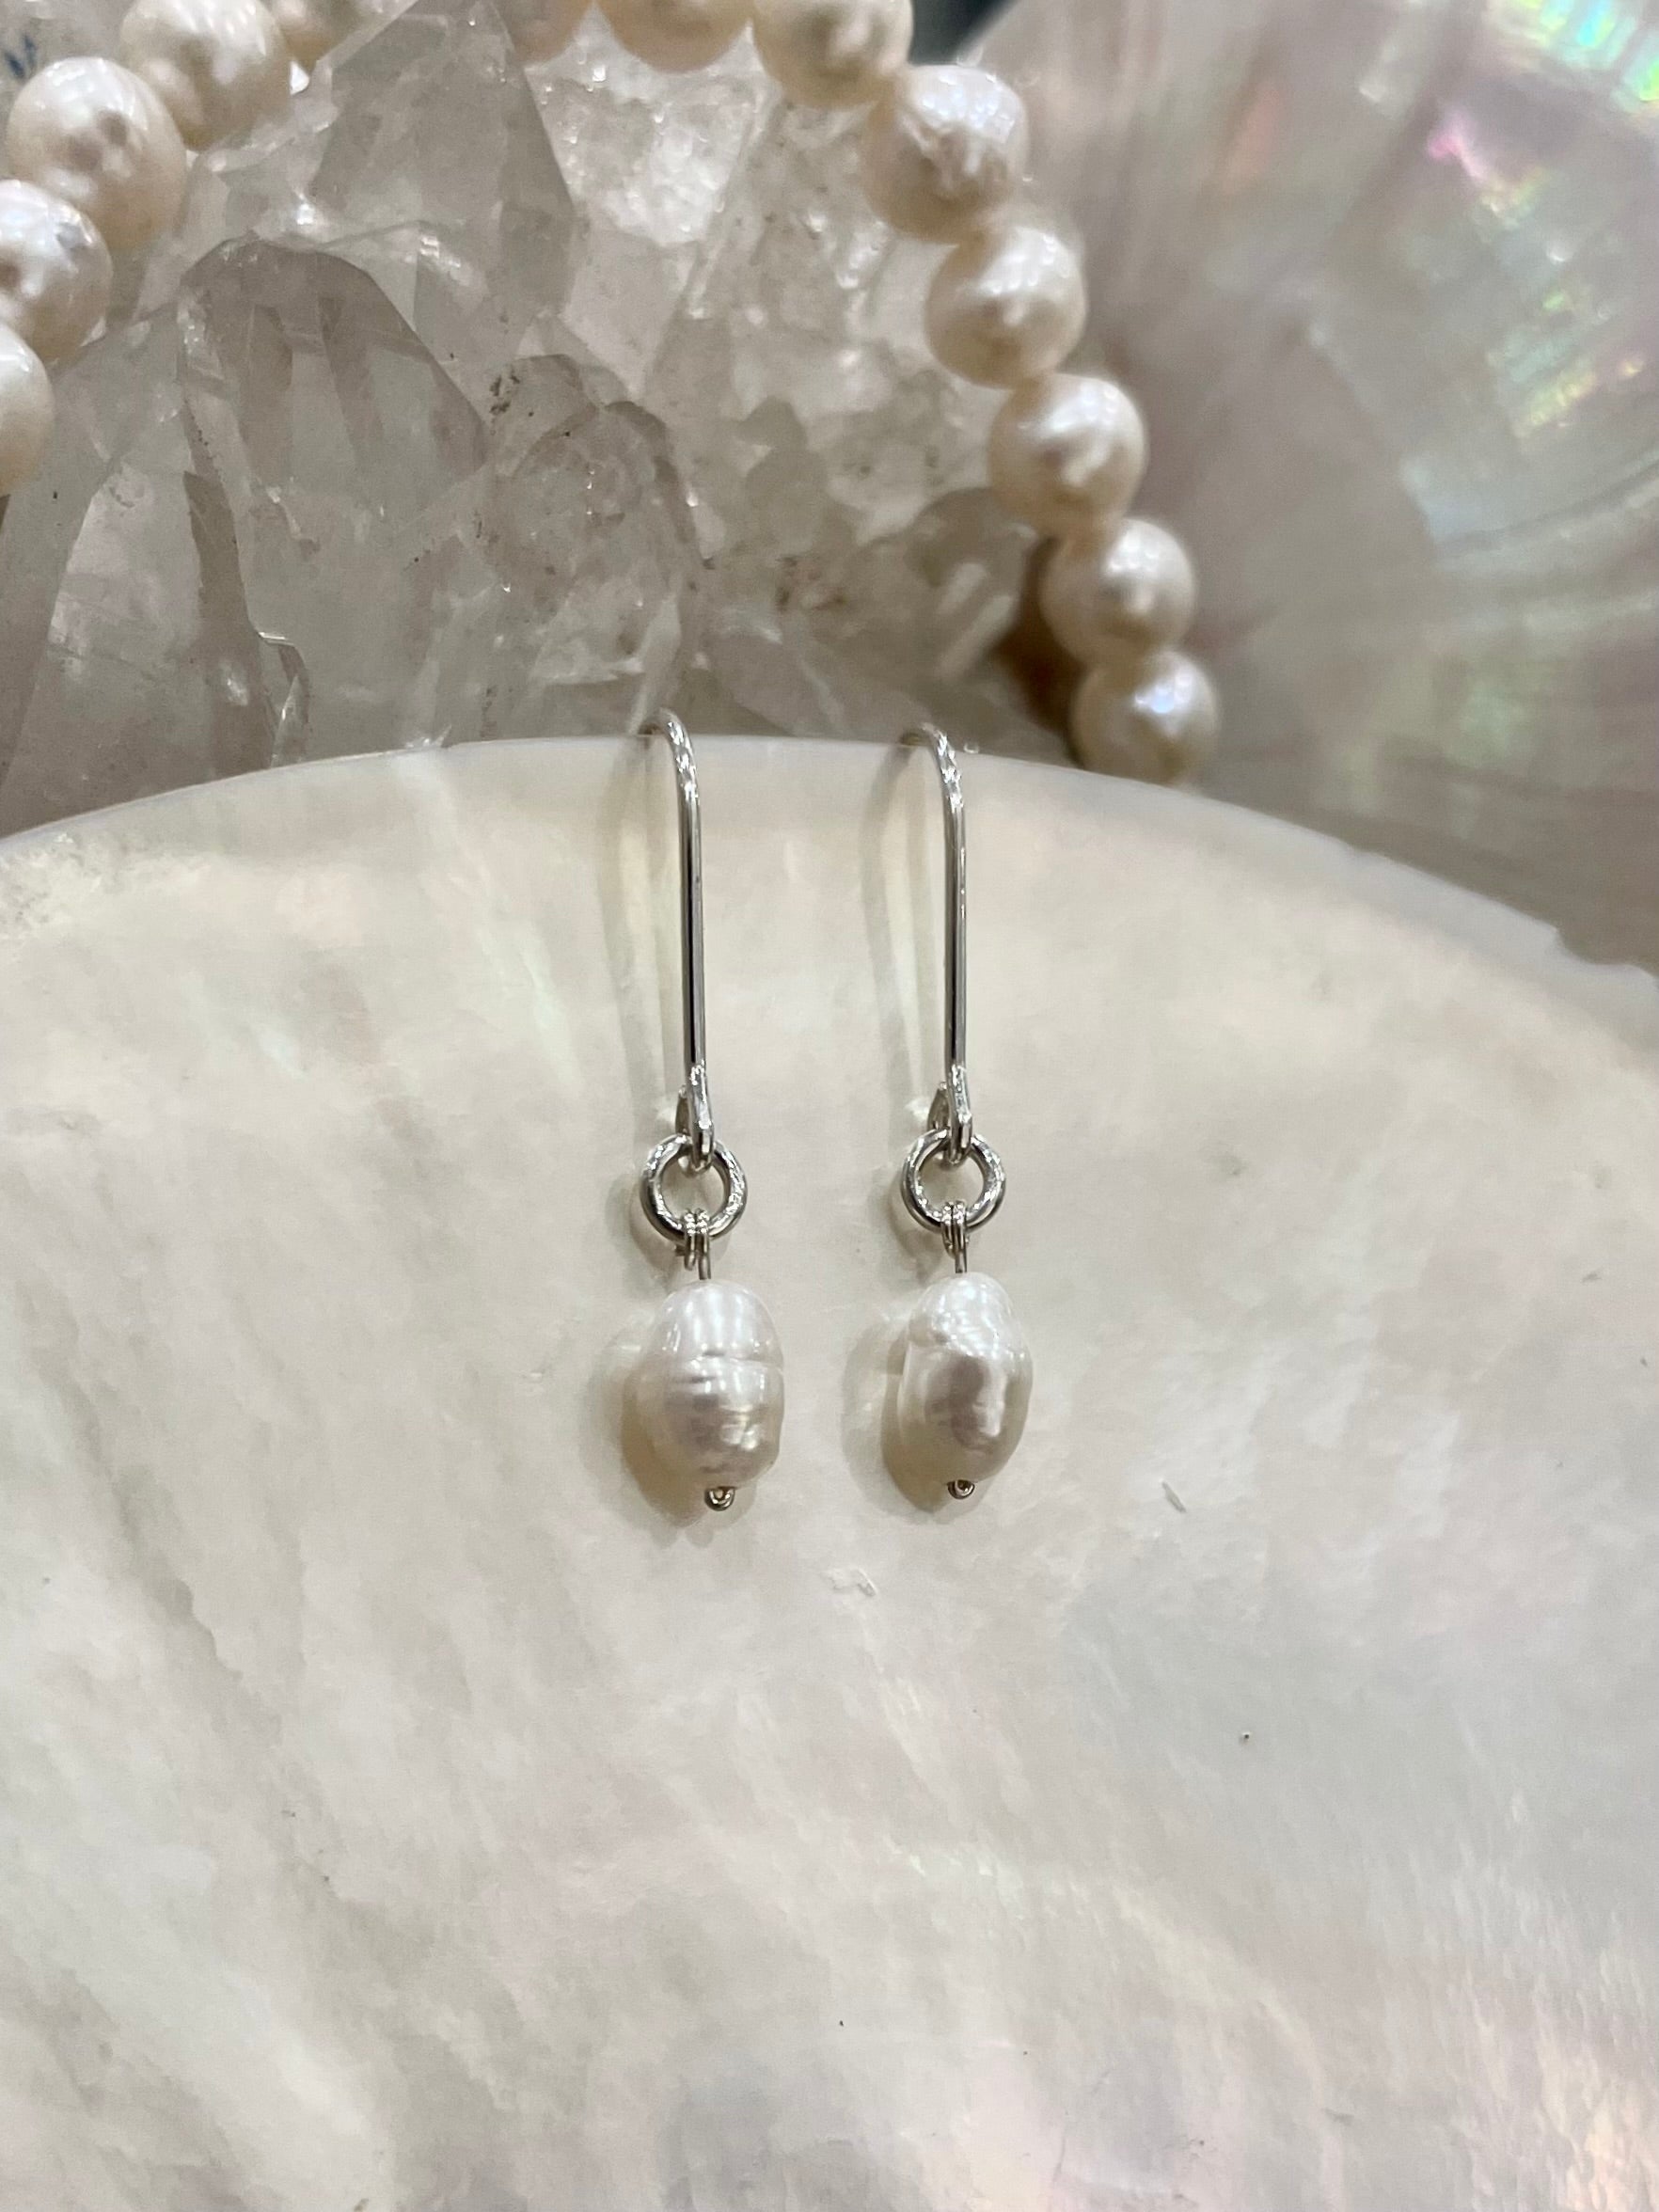 Mini gemstone hook earrings, silver pearl drop earrings, white freshwater pearl earrings in silver